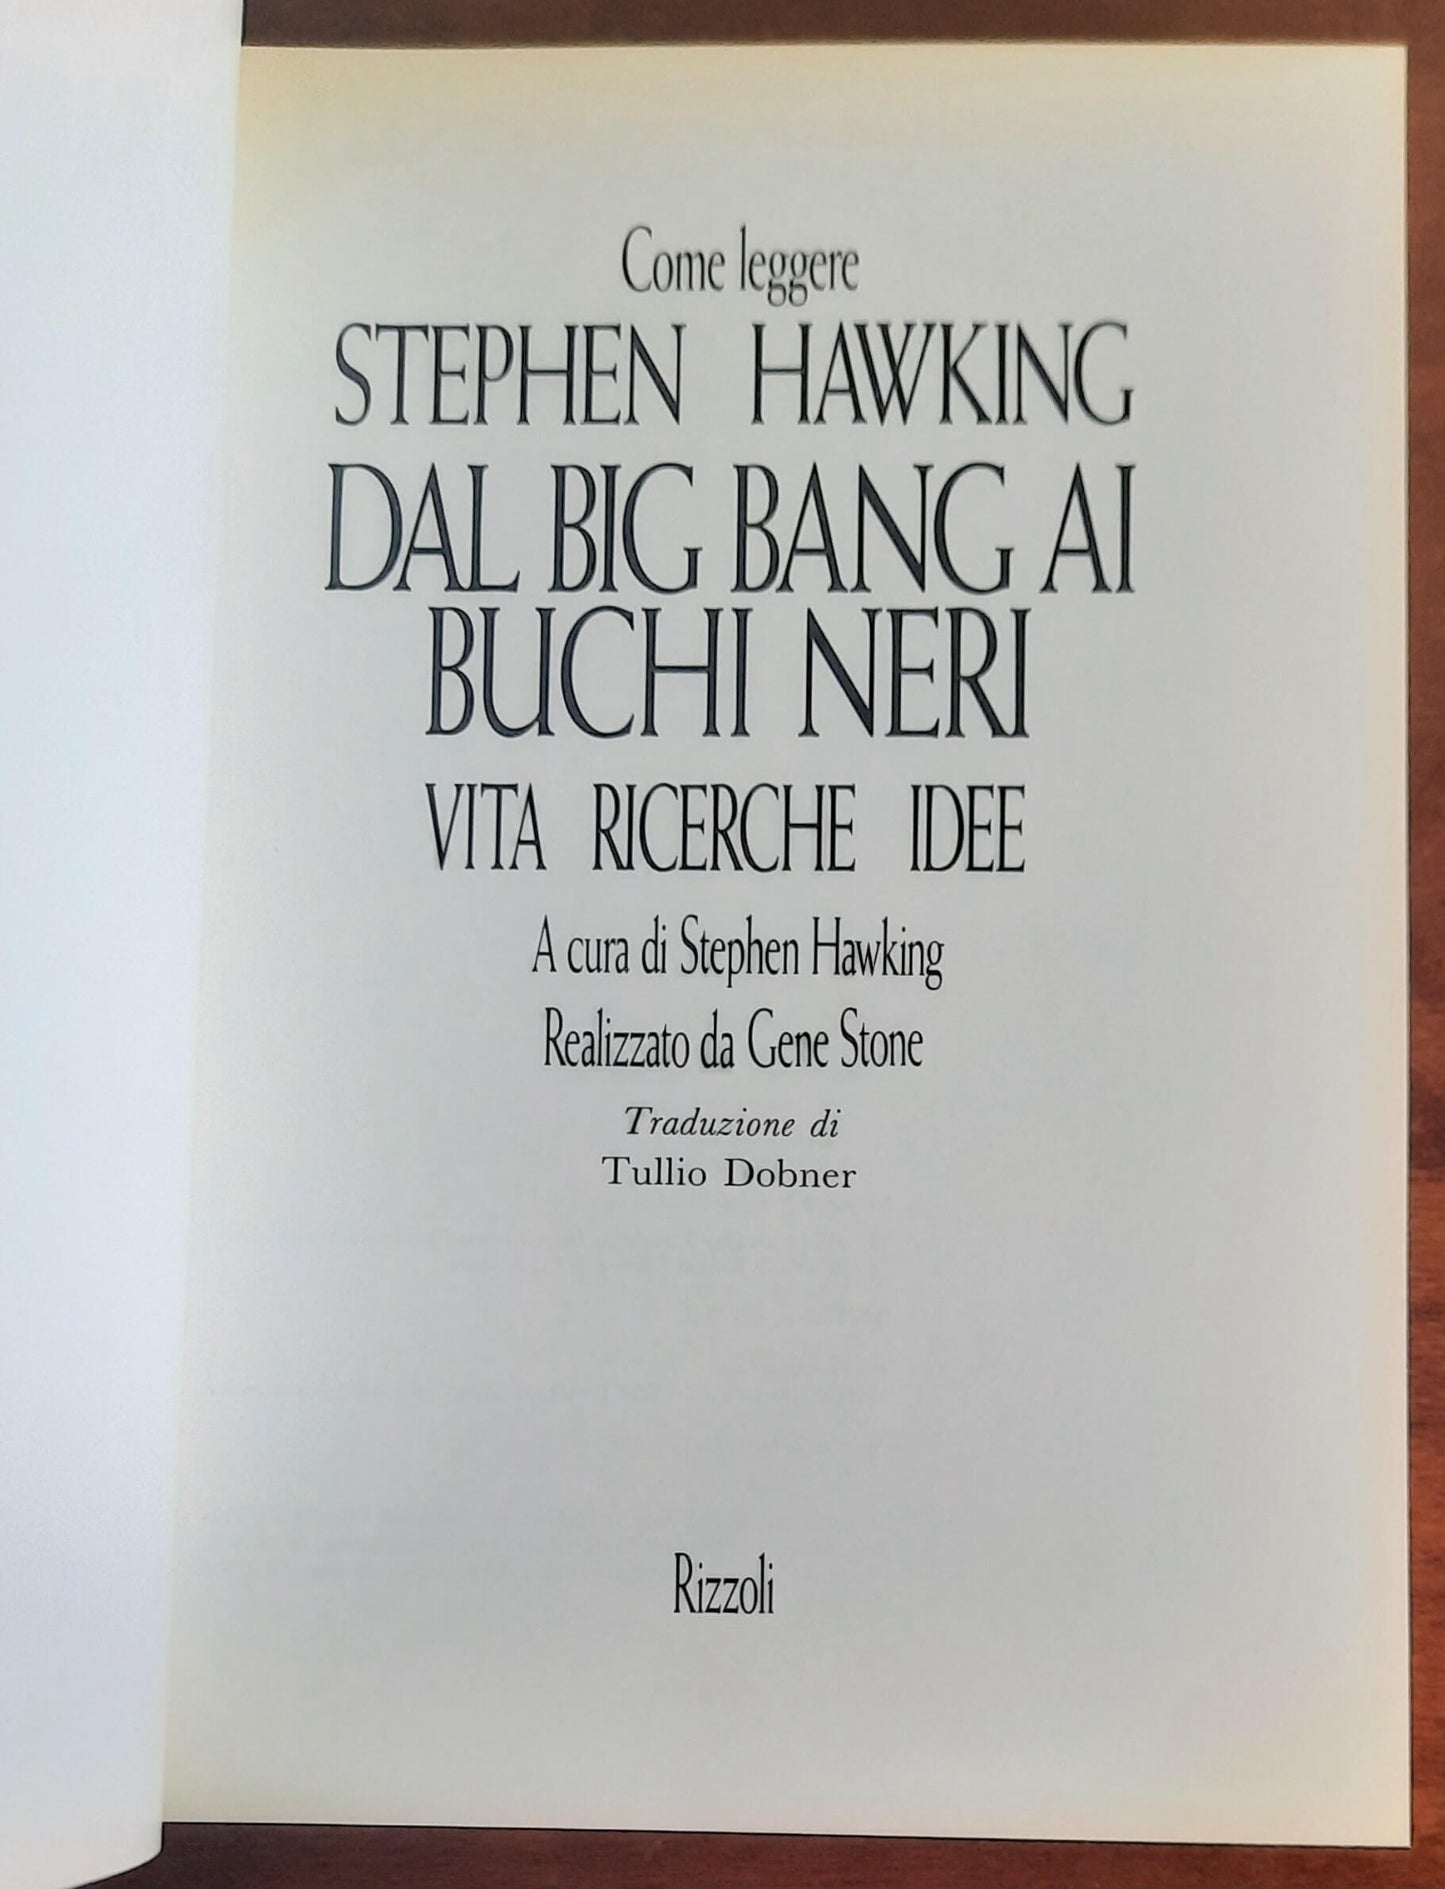 Come leggere Stephen Hawking. Dal big bang ai buchi neri